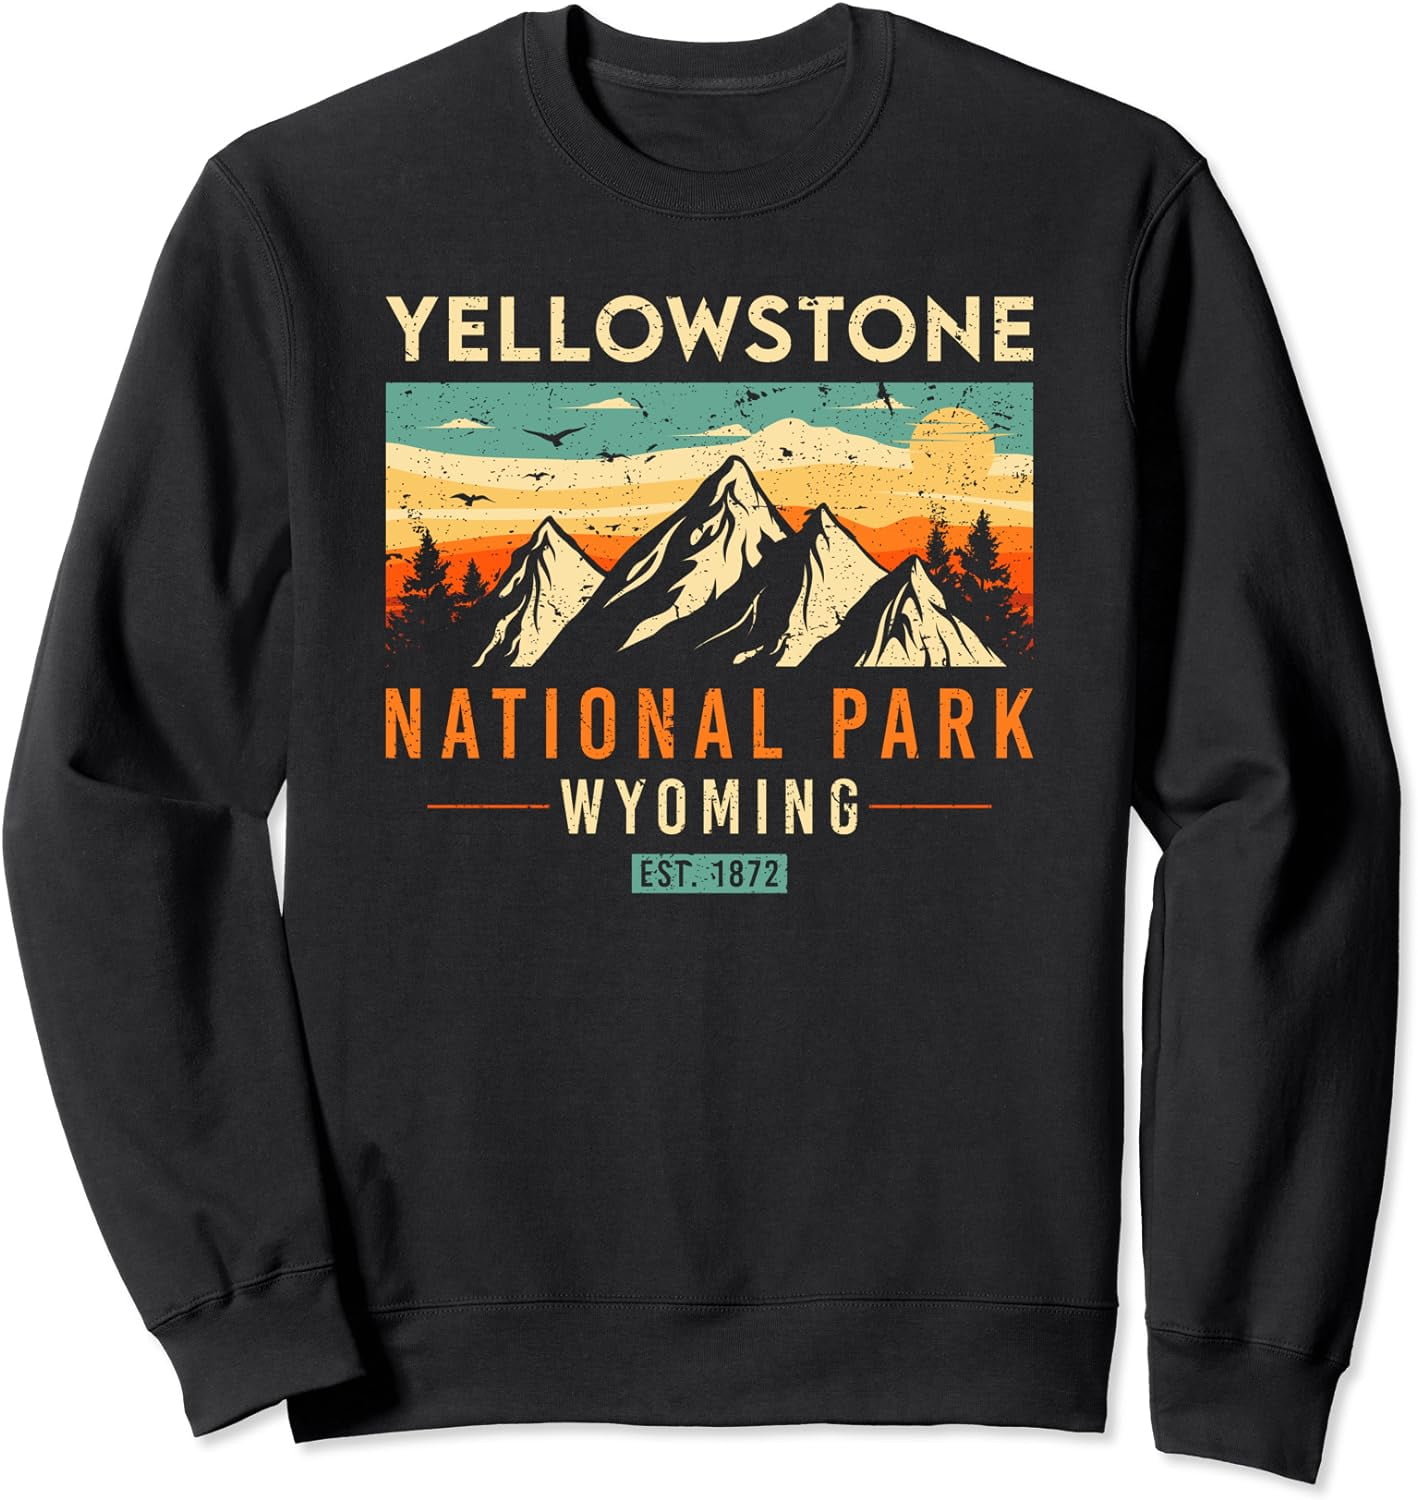 Yellowstone Est 1872 Vintage Retro National Park Sweatshirt - Walmart.com